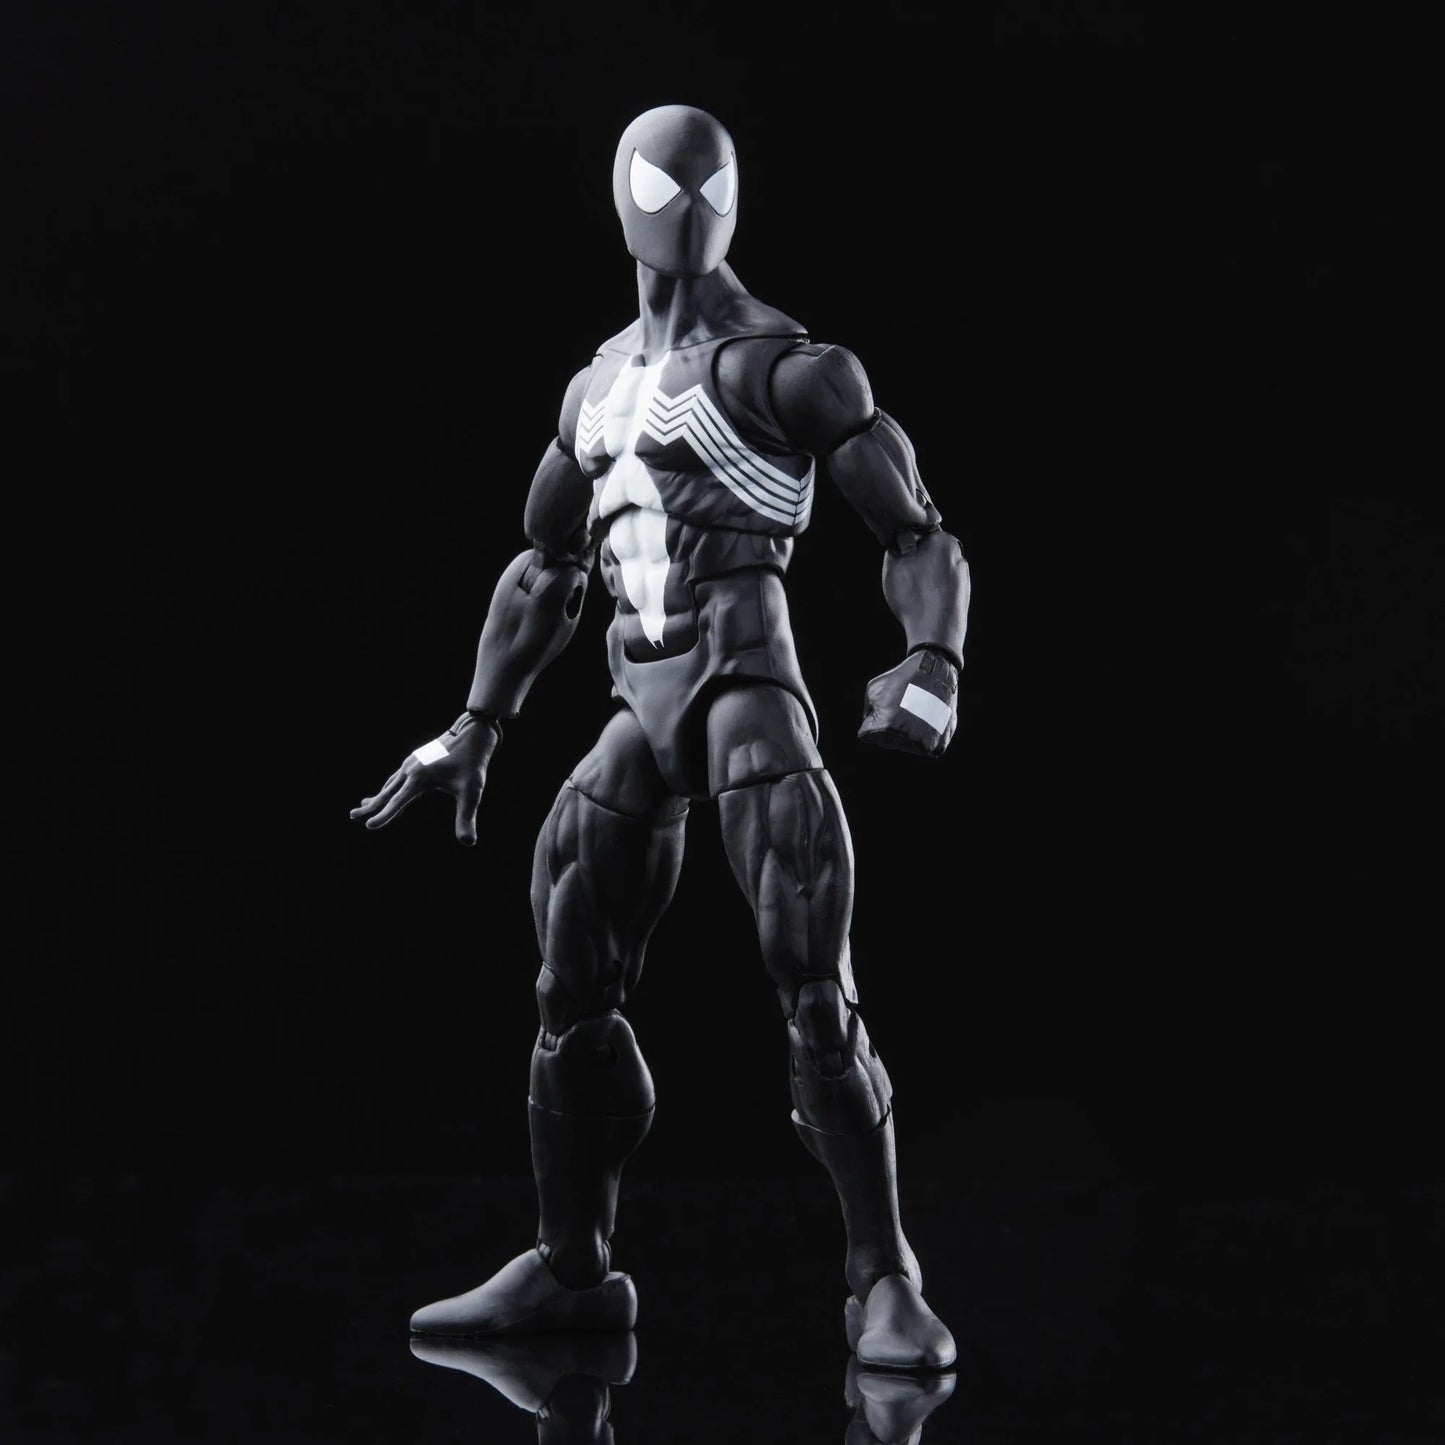 Marvel Legends Series Symbiote Spider-Man 6-Inch Action Figure